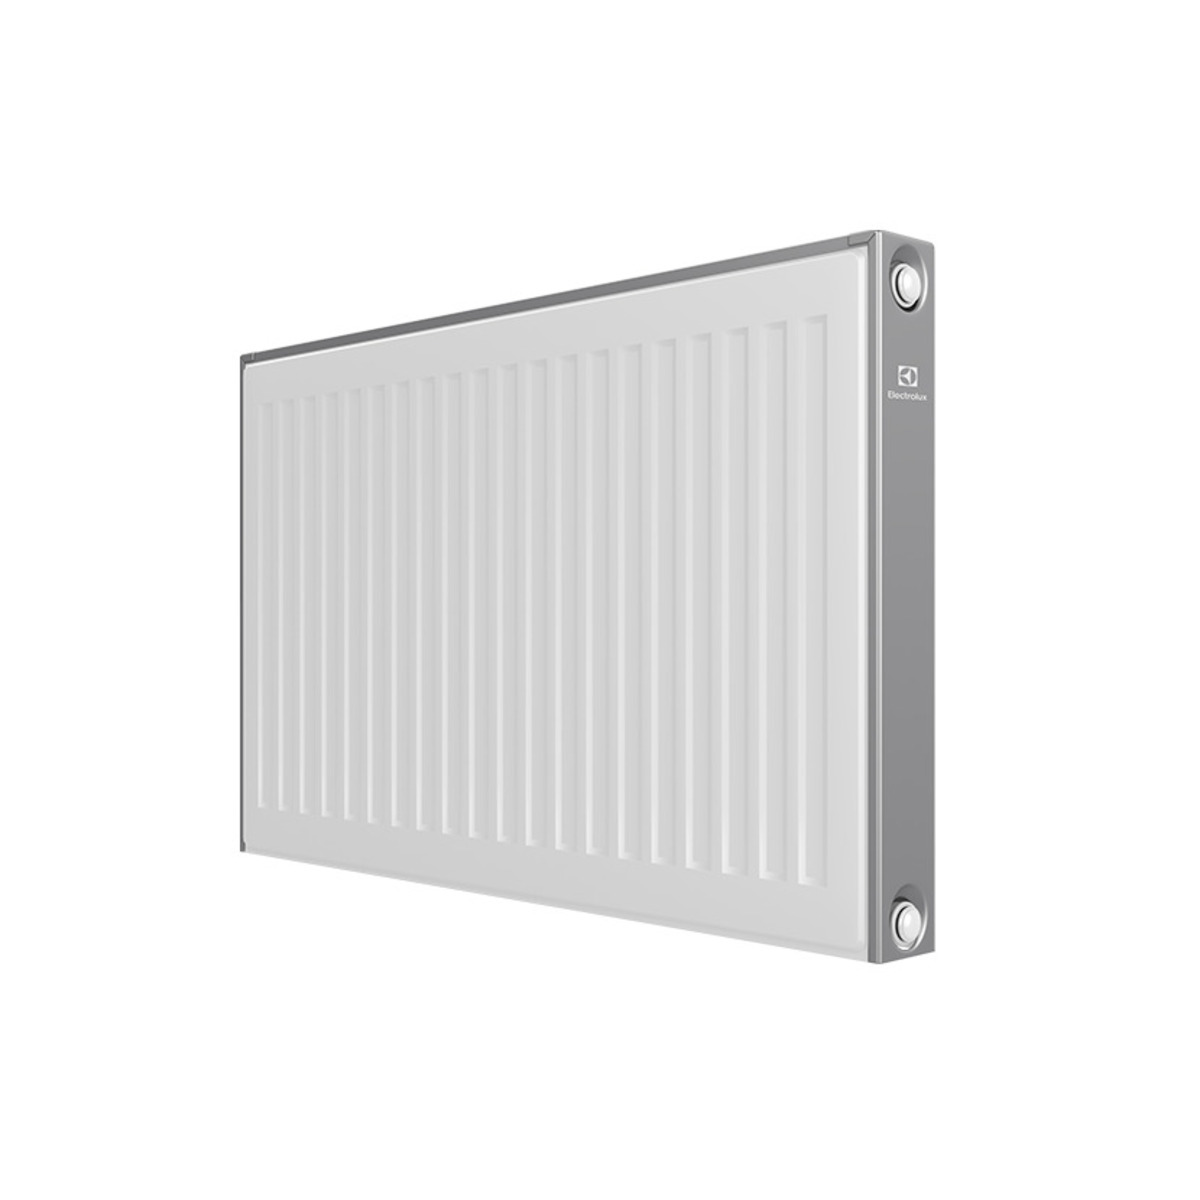 Радиатор Electrolux Compact C22-500-800 RAL9016 (Цвет: White)